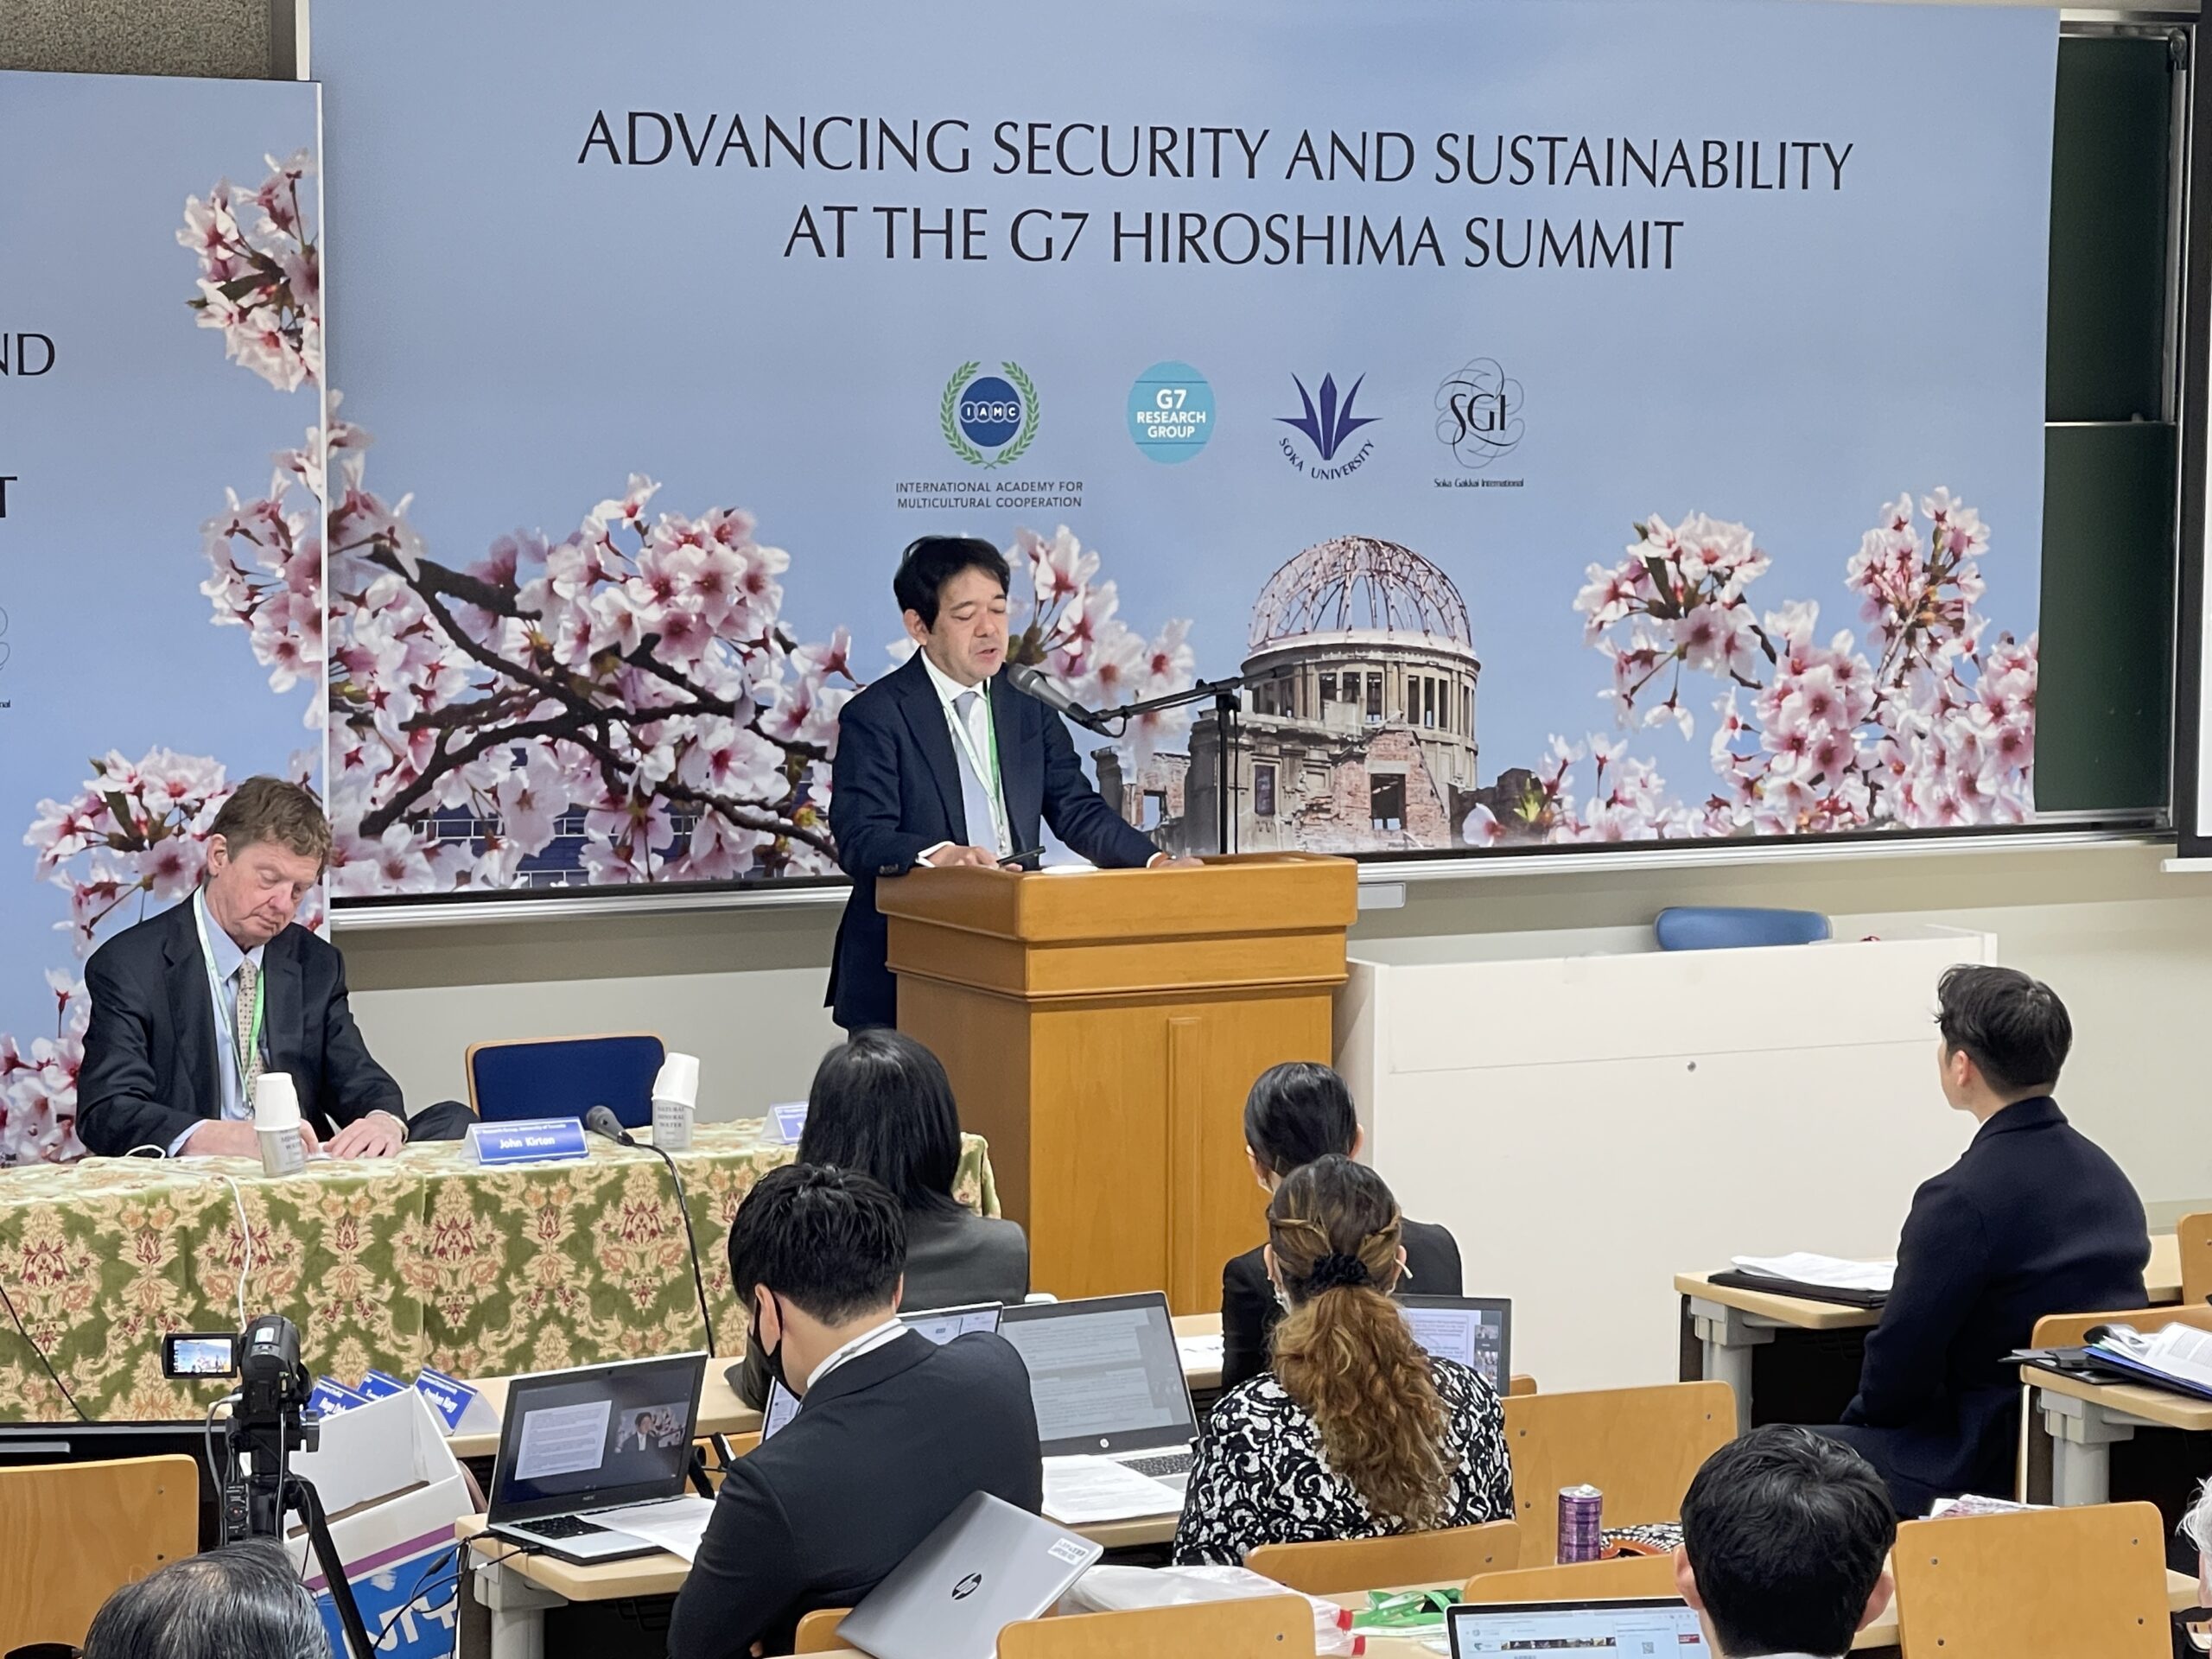  Takashi Ariyoshi, Deputy Secretary General, G7 Hiroshima Summit Secretariat; Director, Economic Policy Division, Ministry of Foreign Affairs, giving the keynote address. Credit: Katsuhiro Asagiri, Multimedia Director of IDN-INPS.